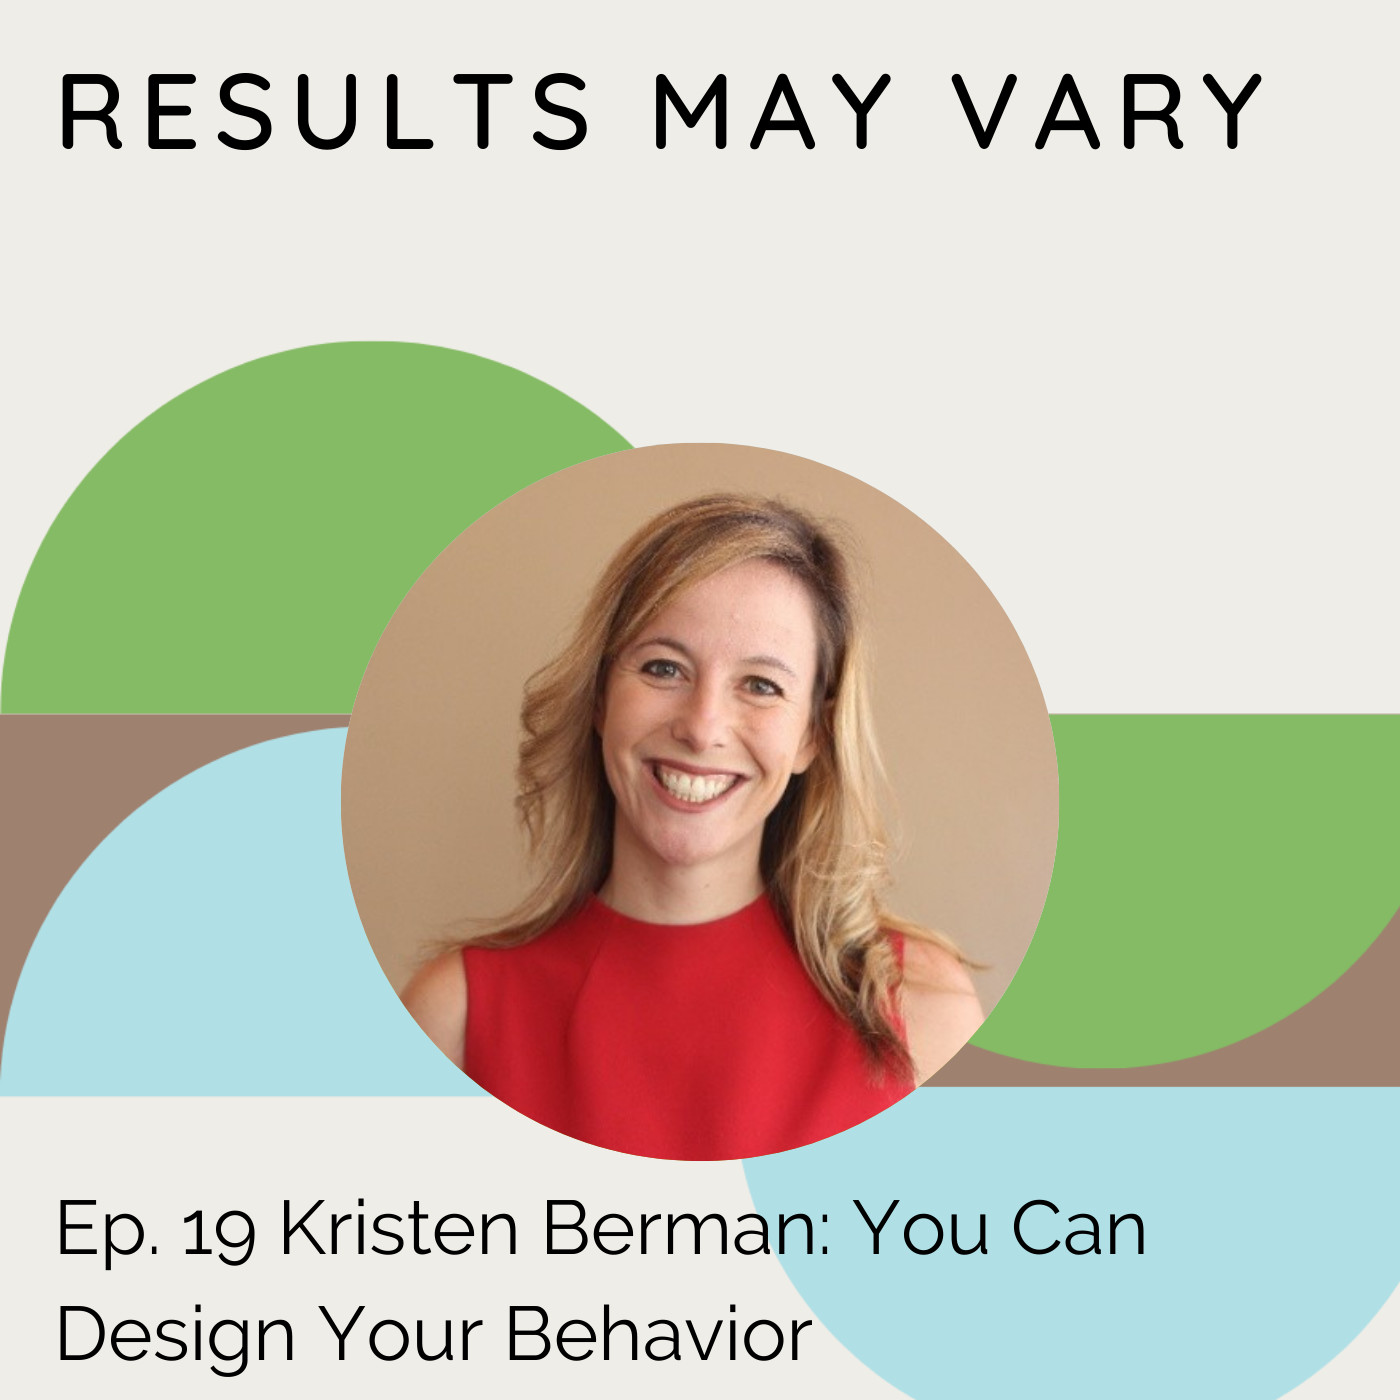 RMV 19 Kristen Berman: You Can Design Your Behavior